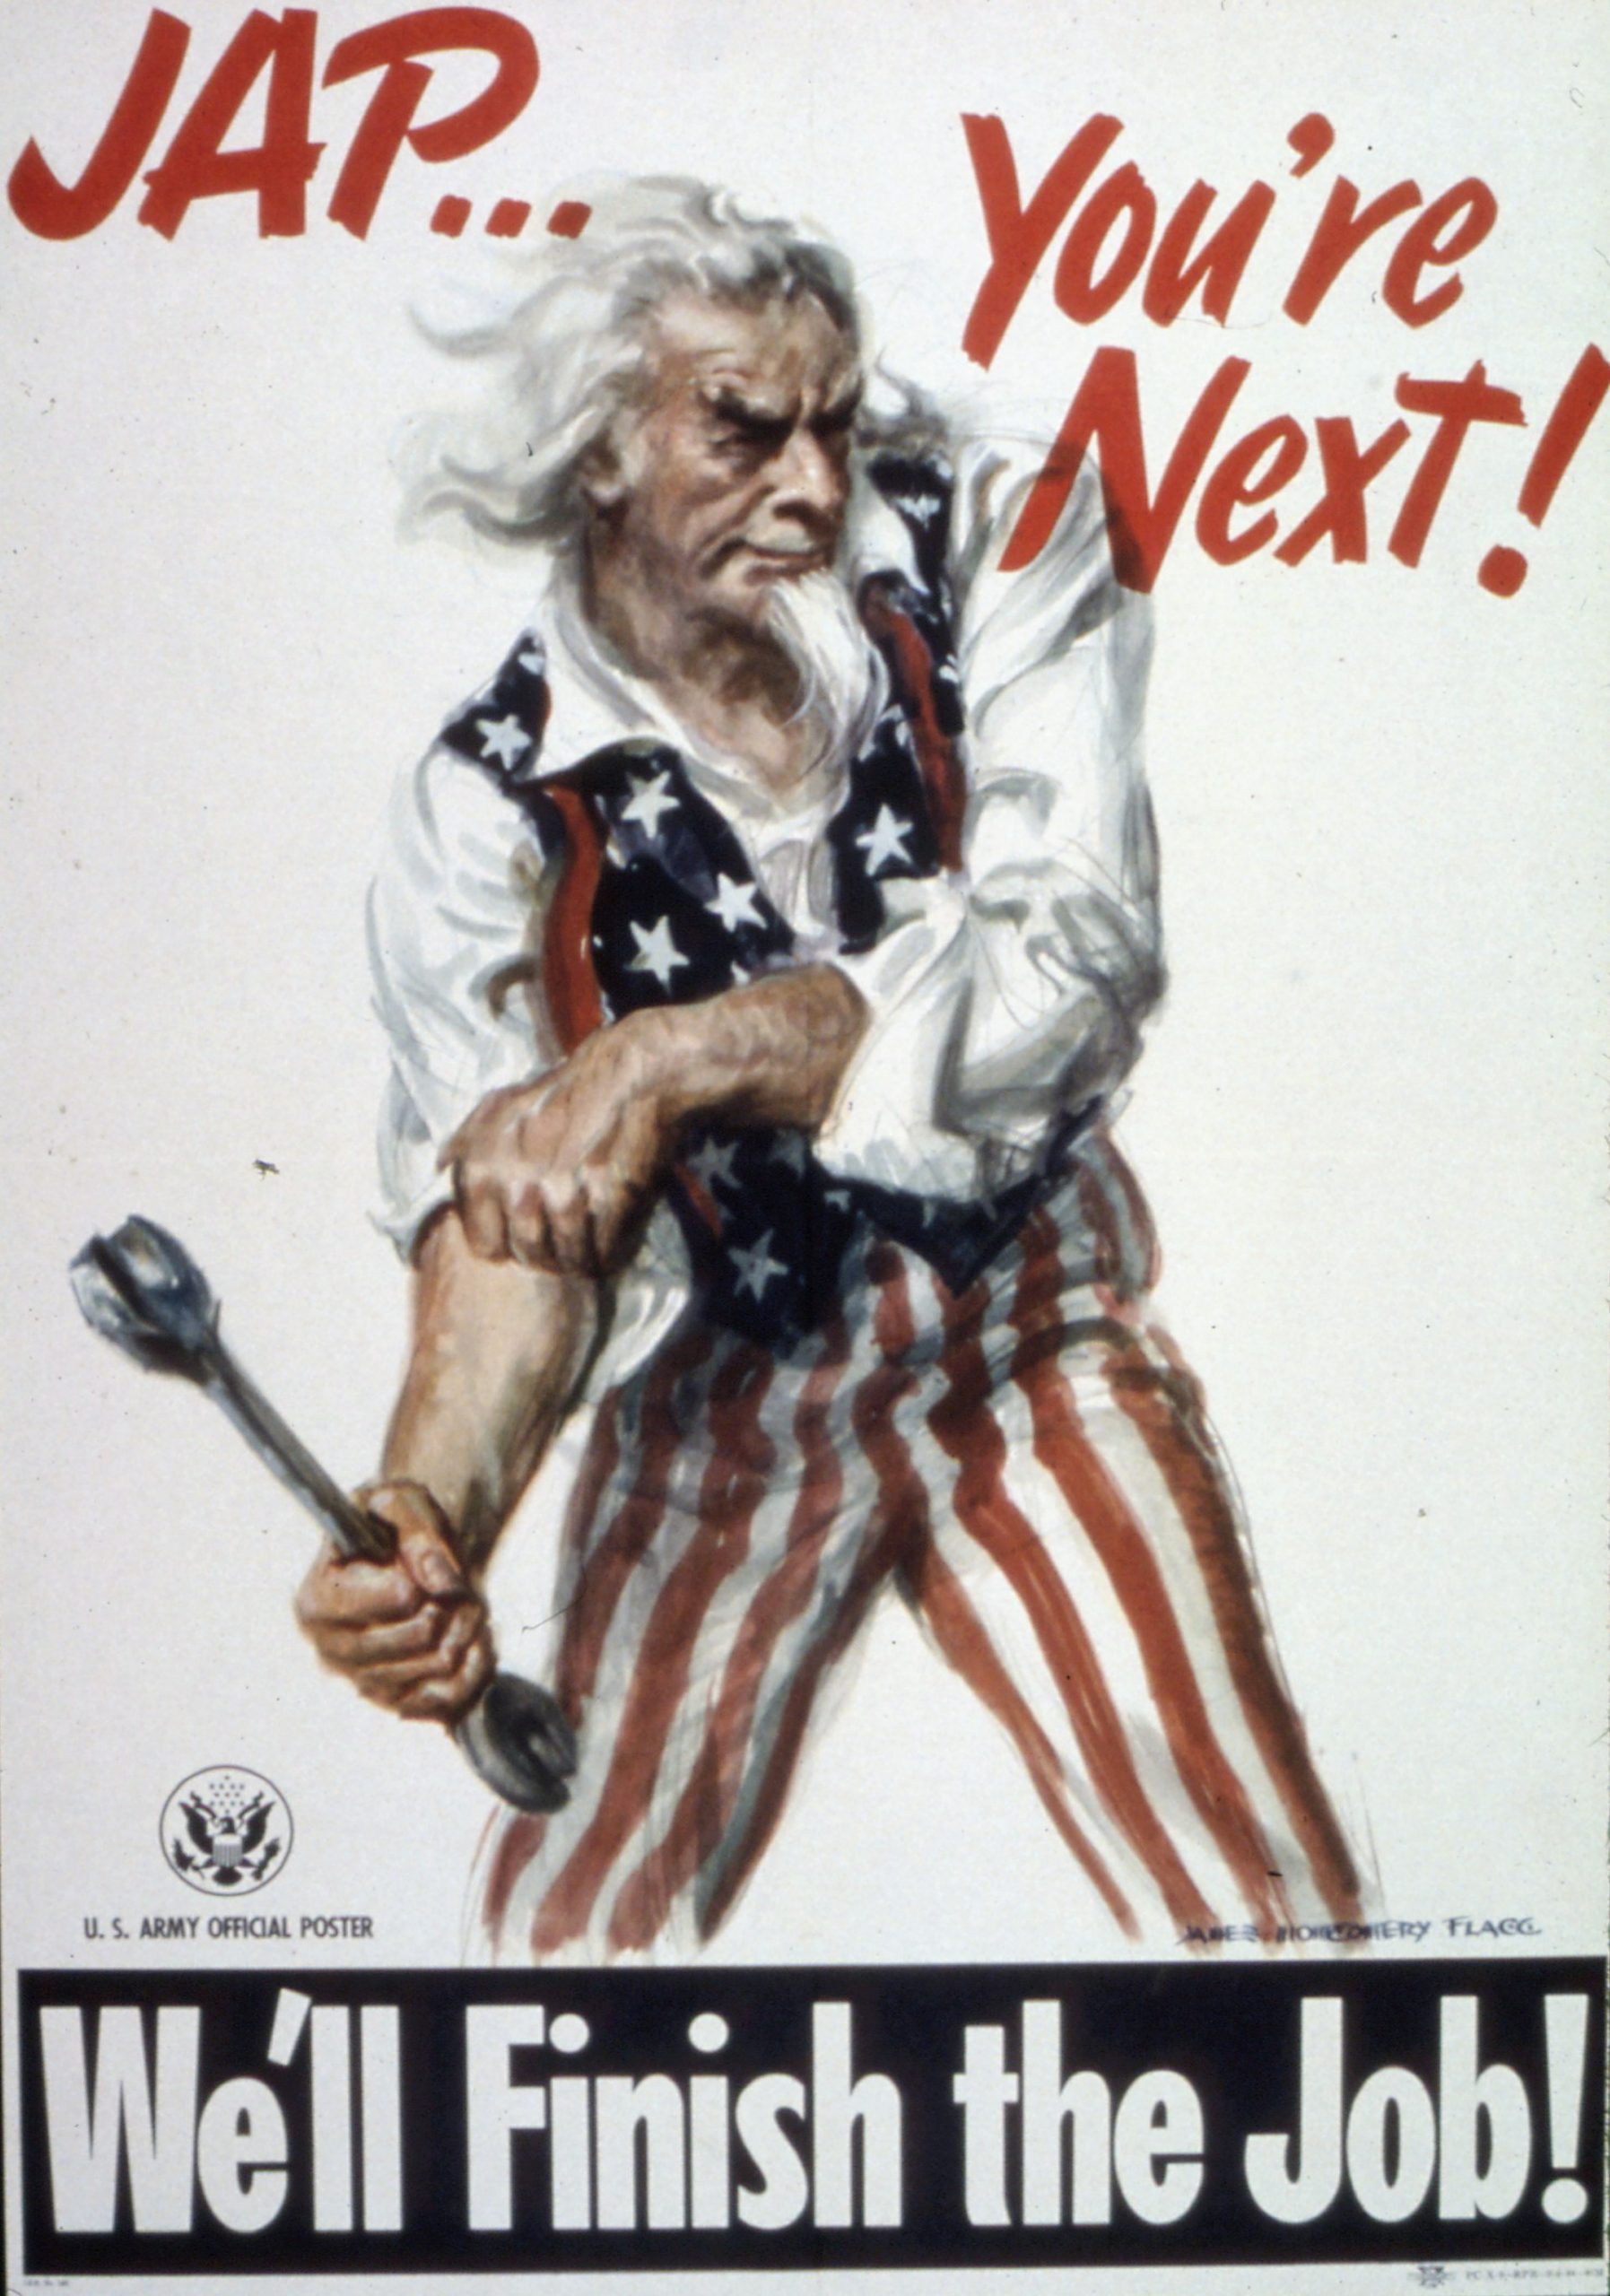 U.S. Army propaganda poster